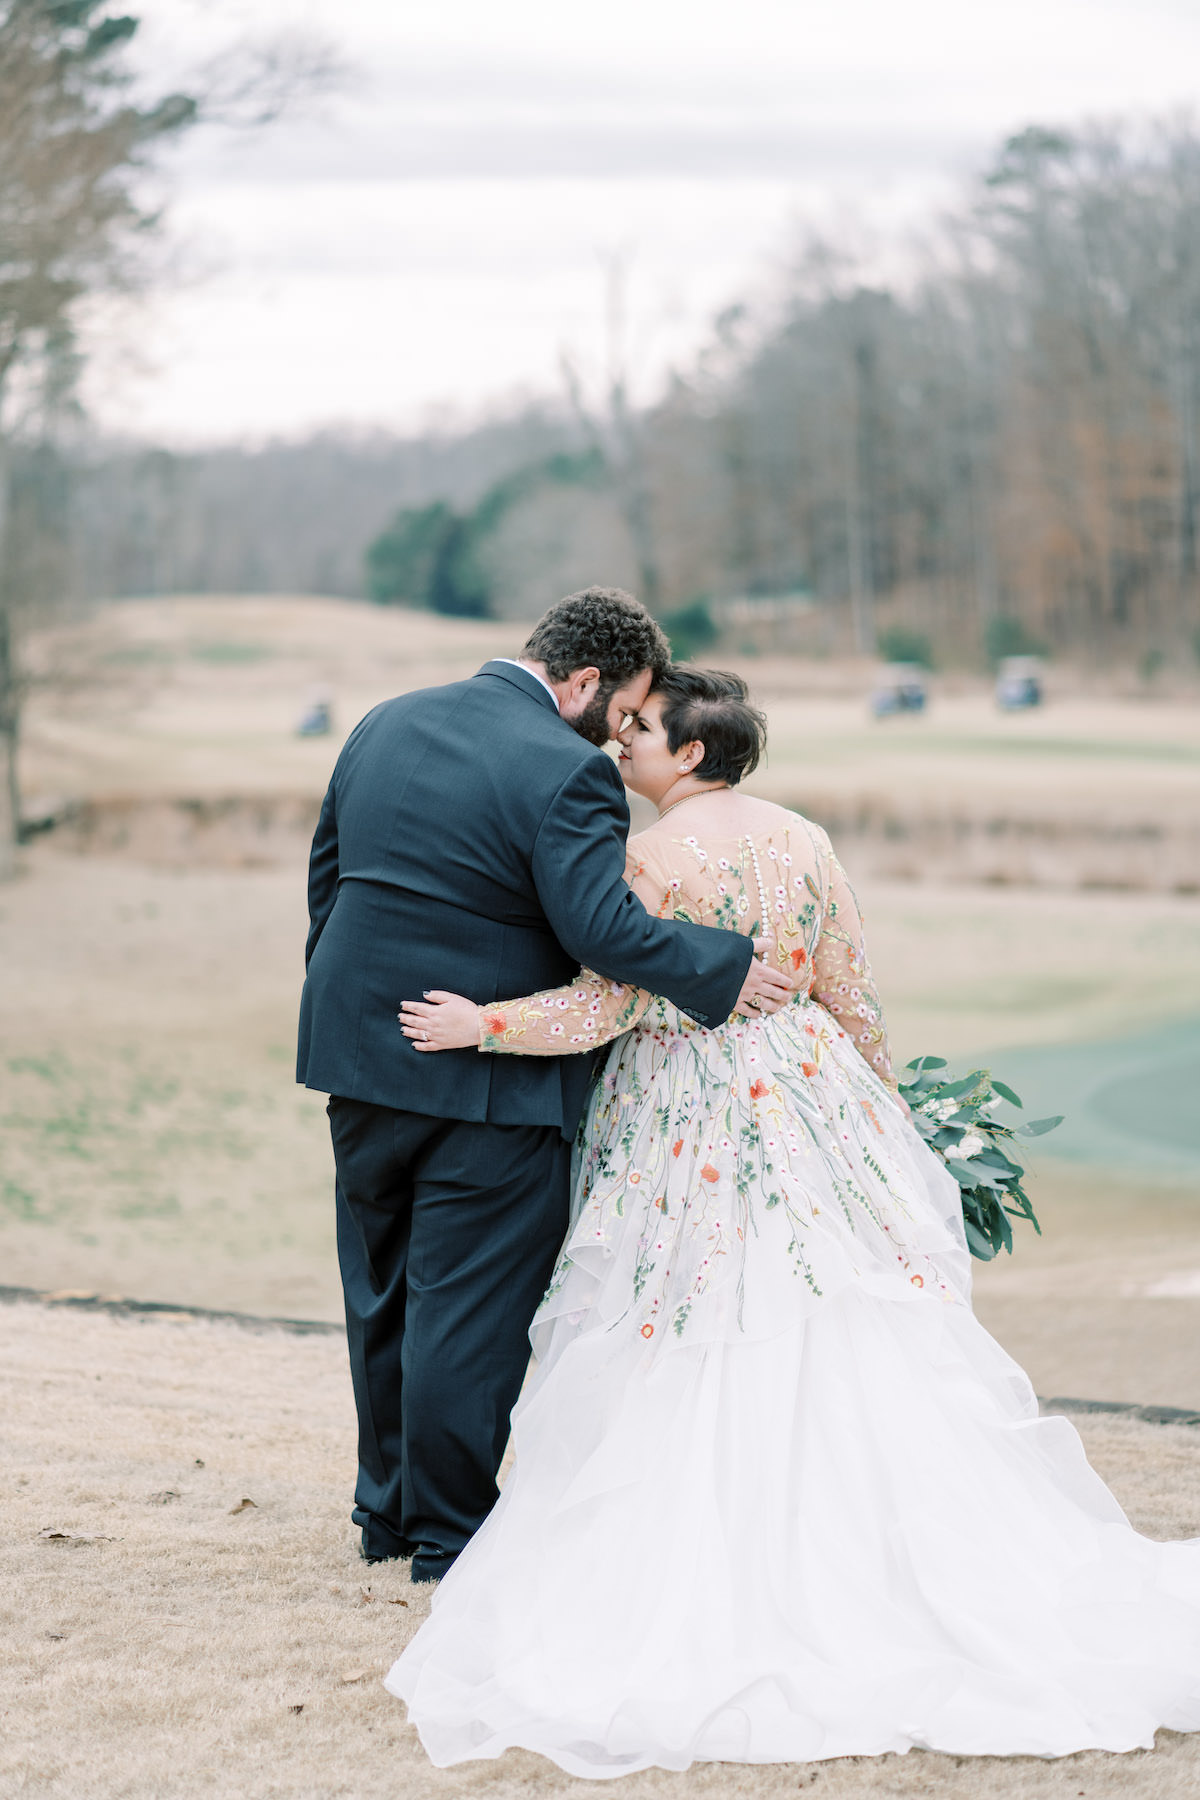 A Whimsical Winter Wedding with a Custom Floral Wedding Dress ⋆ Ruffled